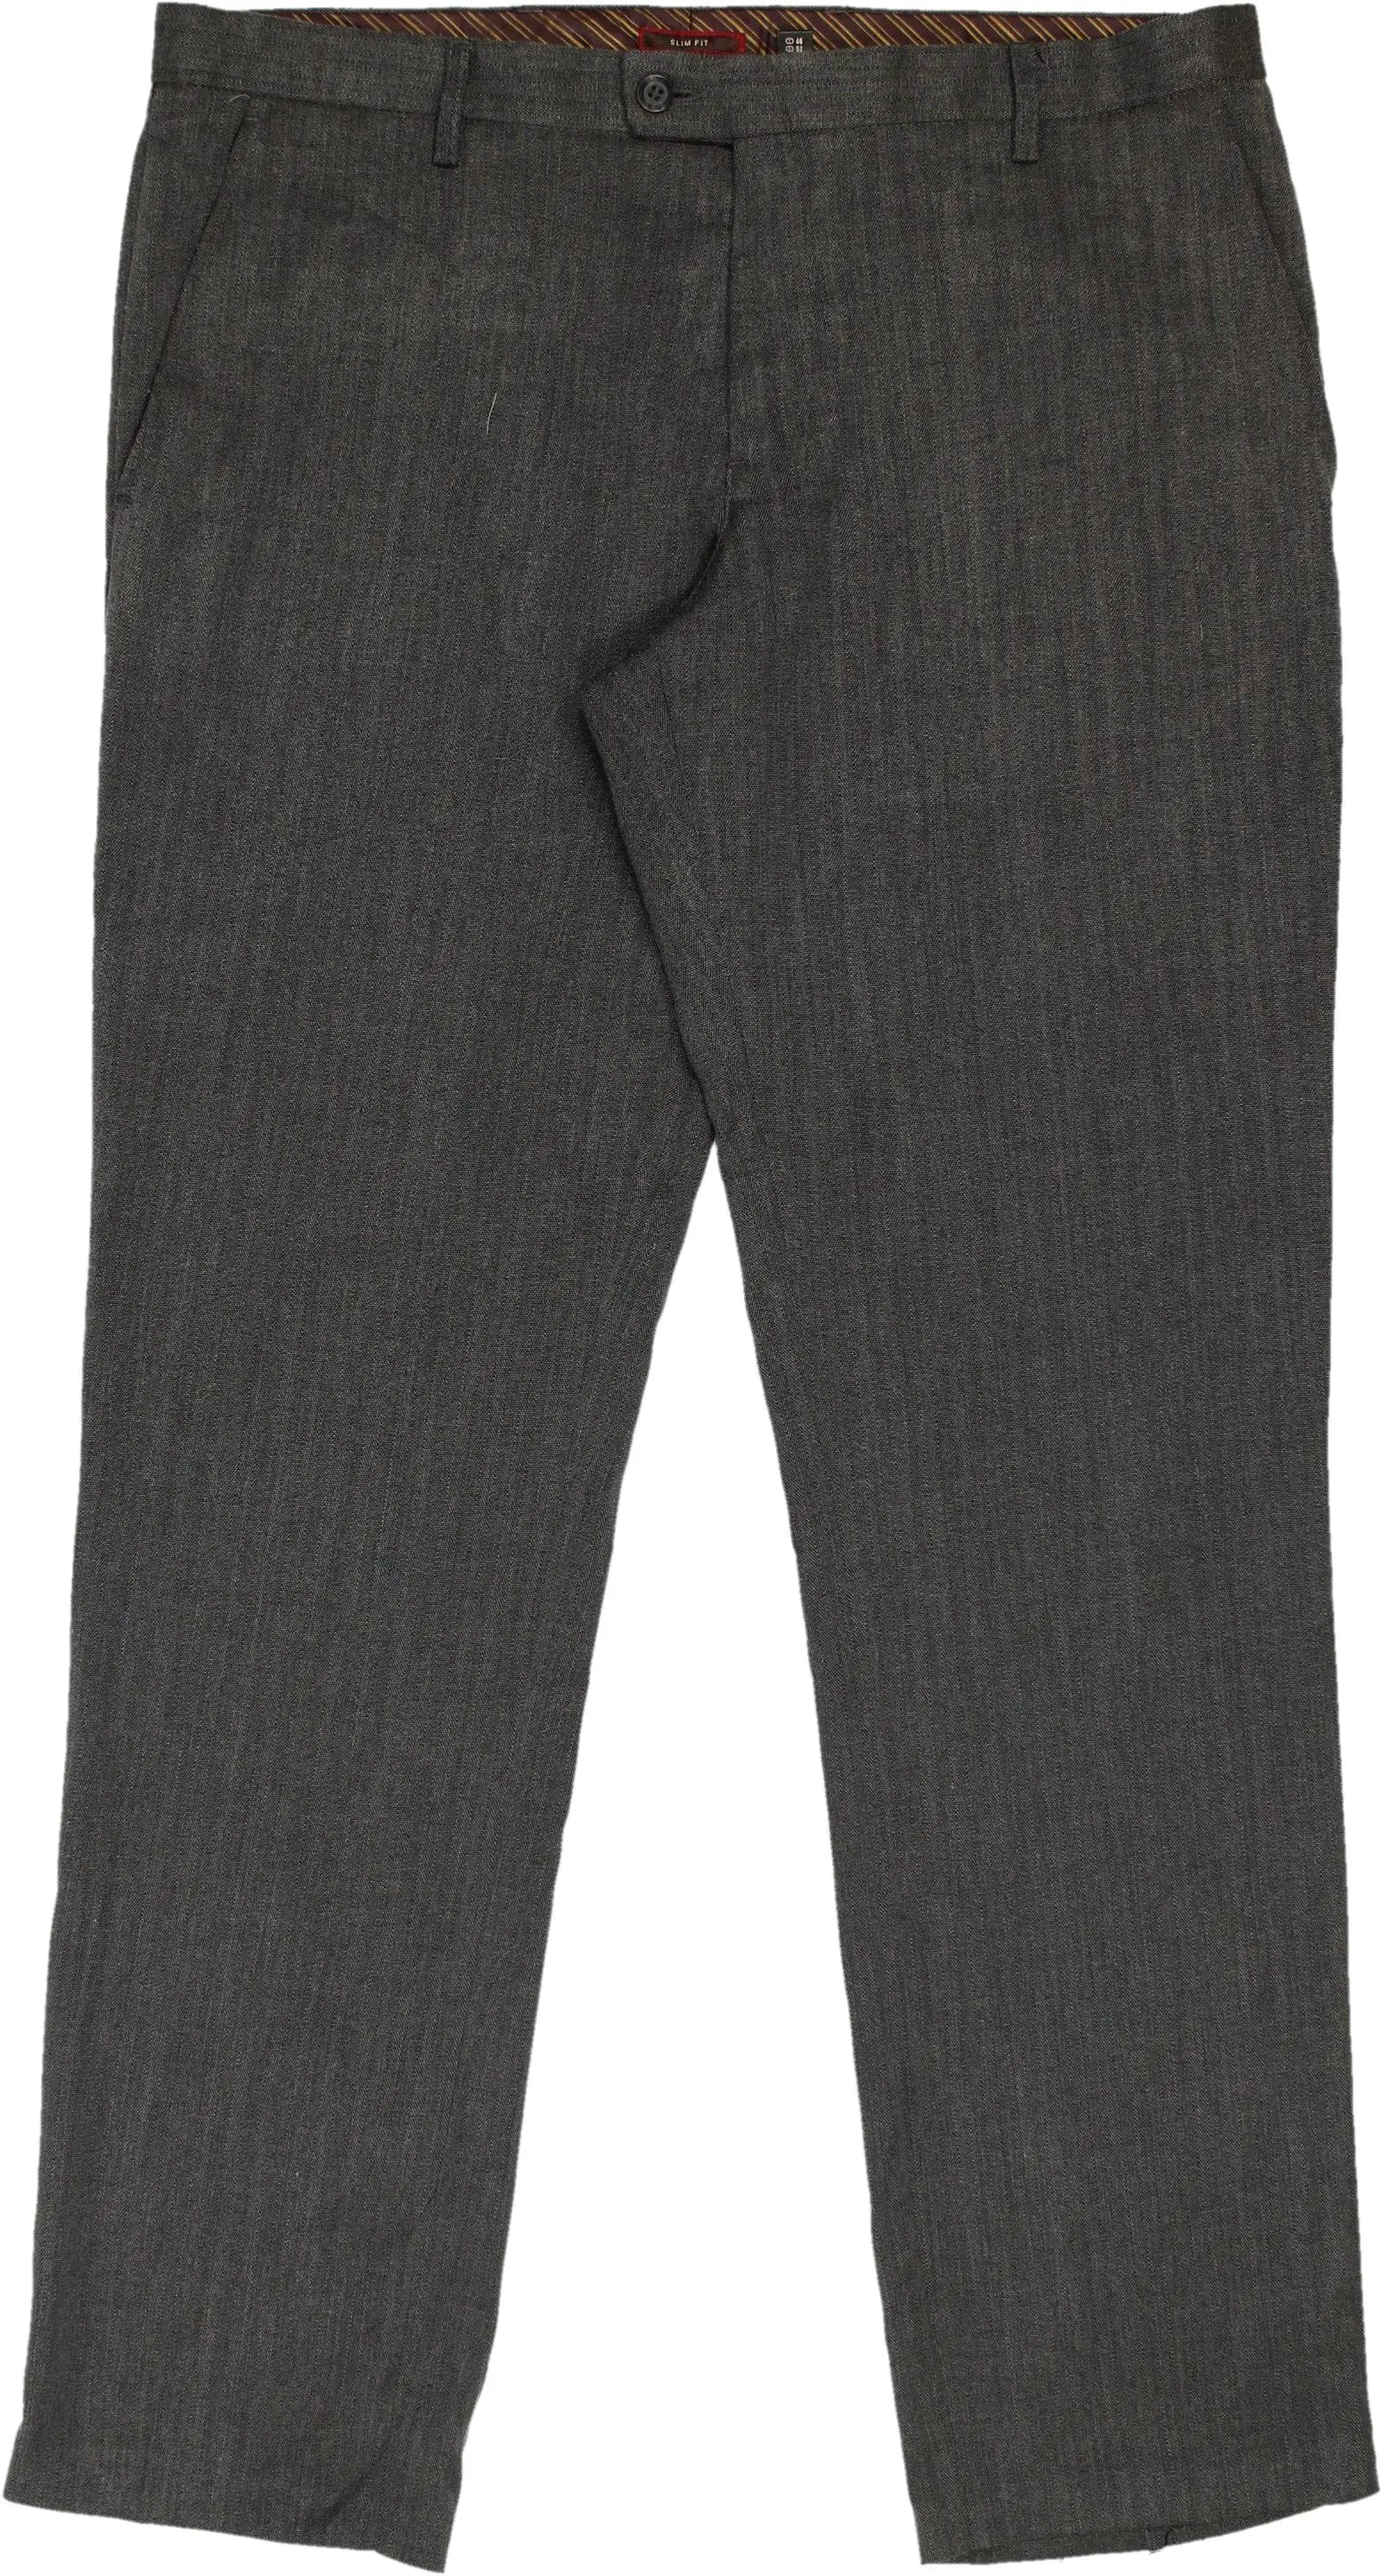 Vintage trousers for men